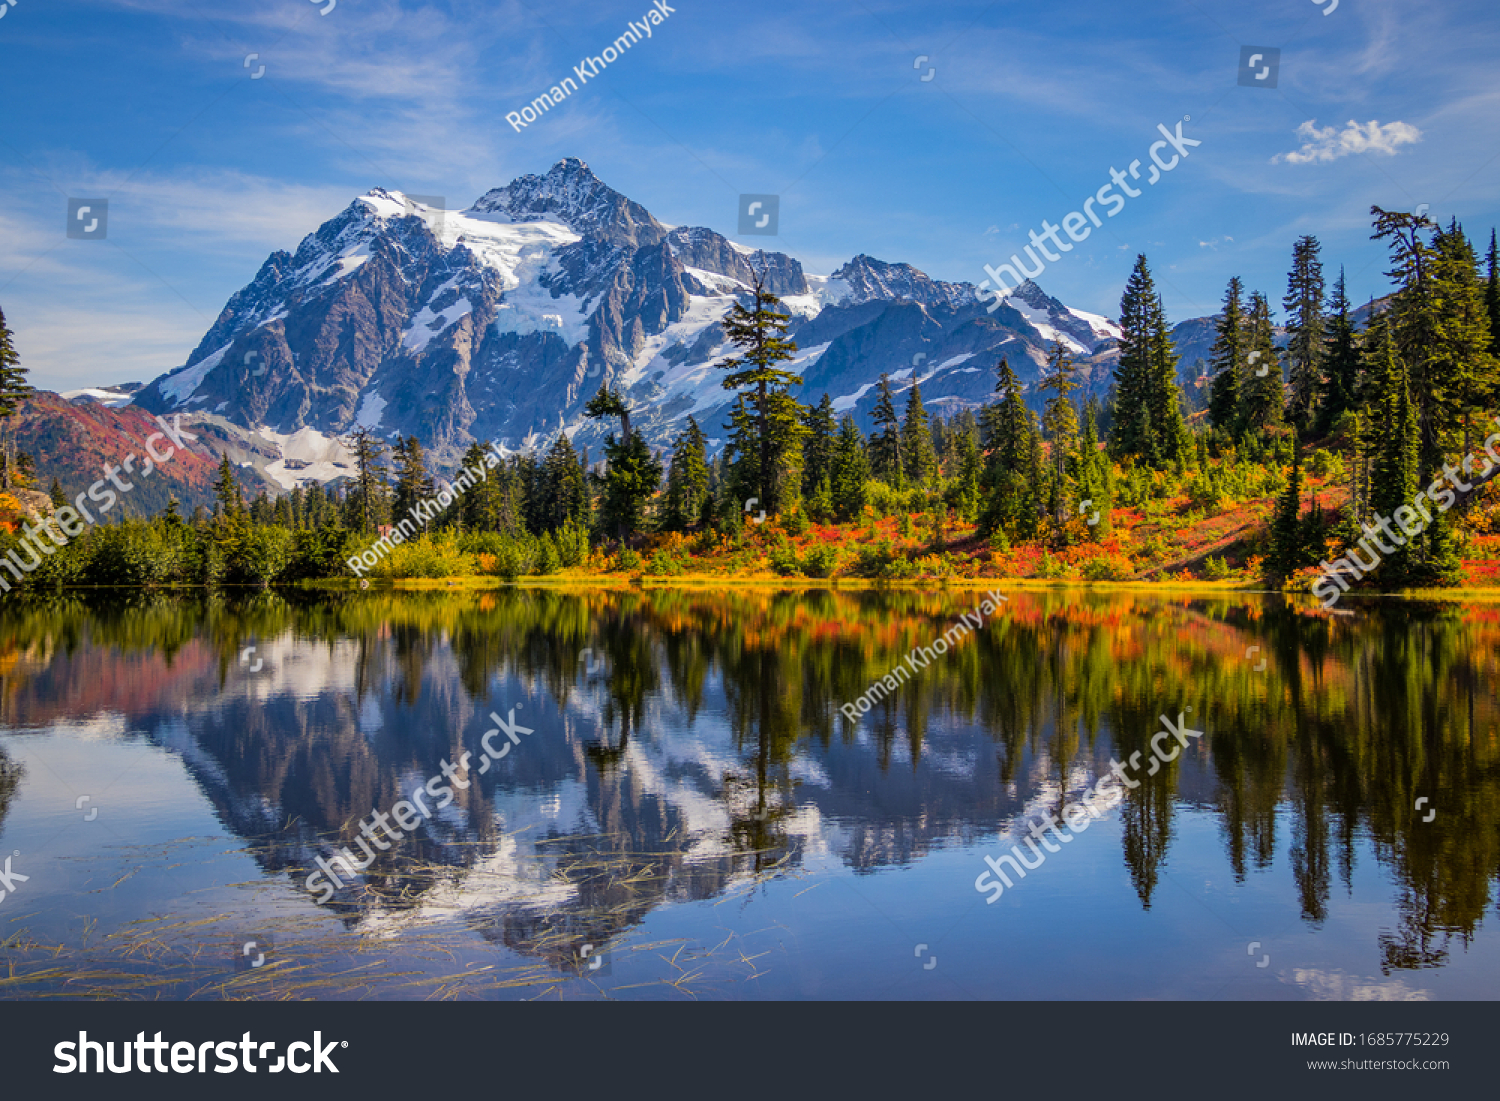 Mountain lake, Mt. Shuksan, Washington st, Northern cascades #1685775229